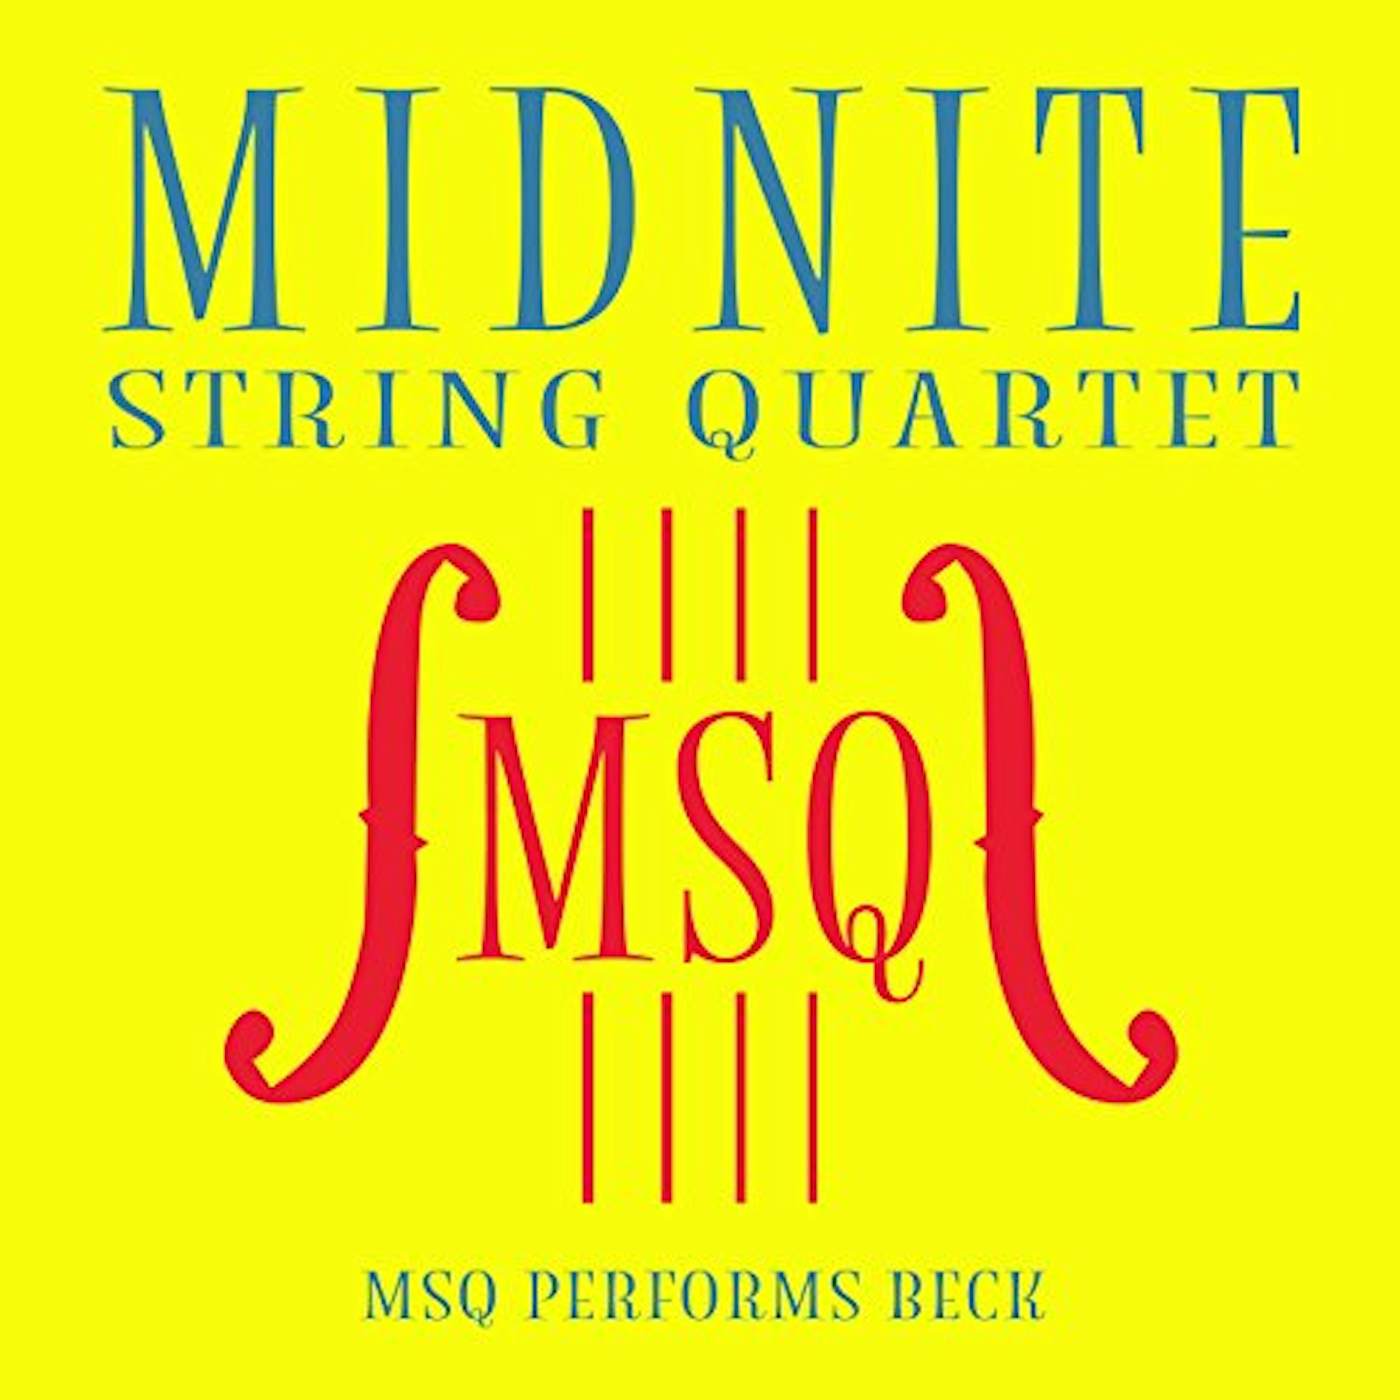 Midnite String Quartet MSQ PERFORMS BECK (MOD) CD